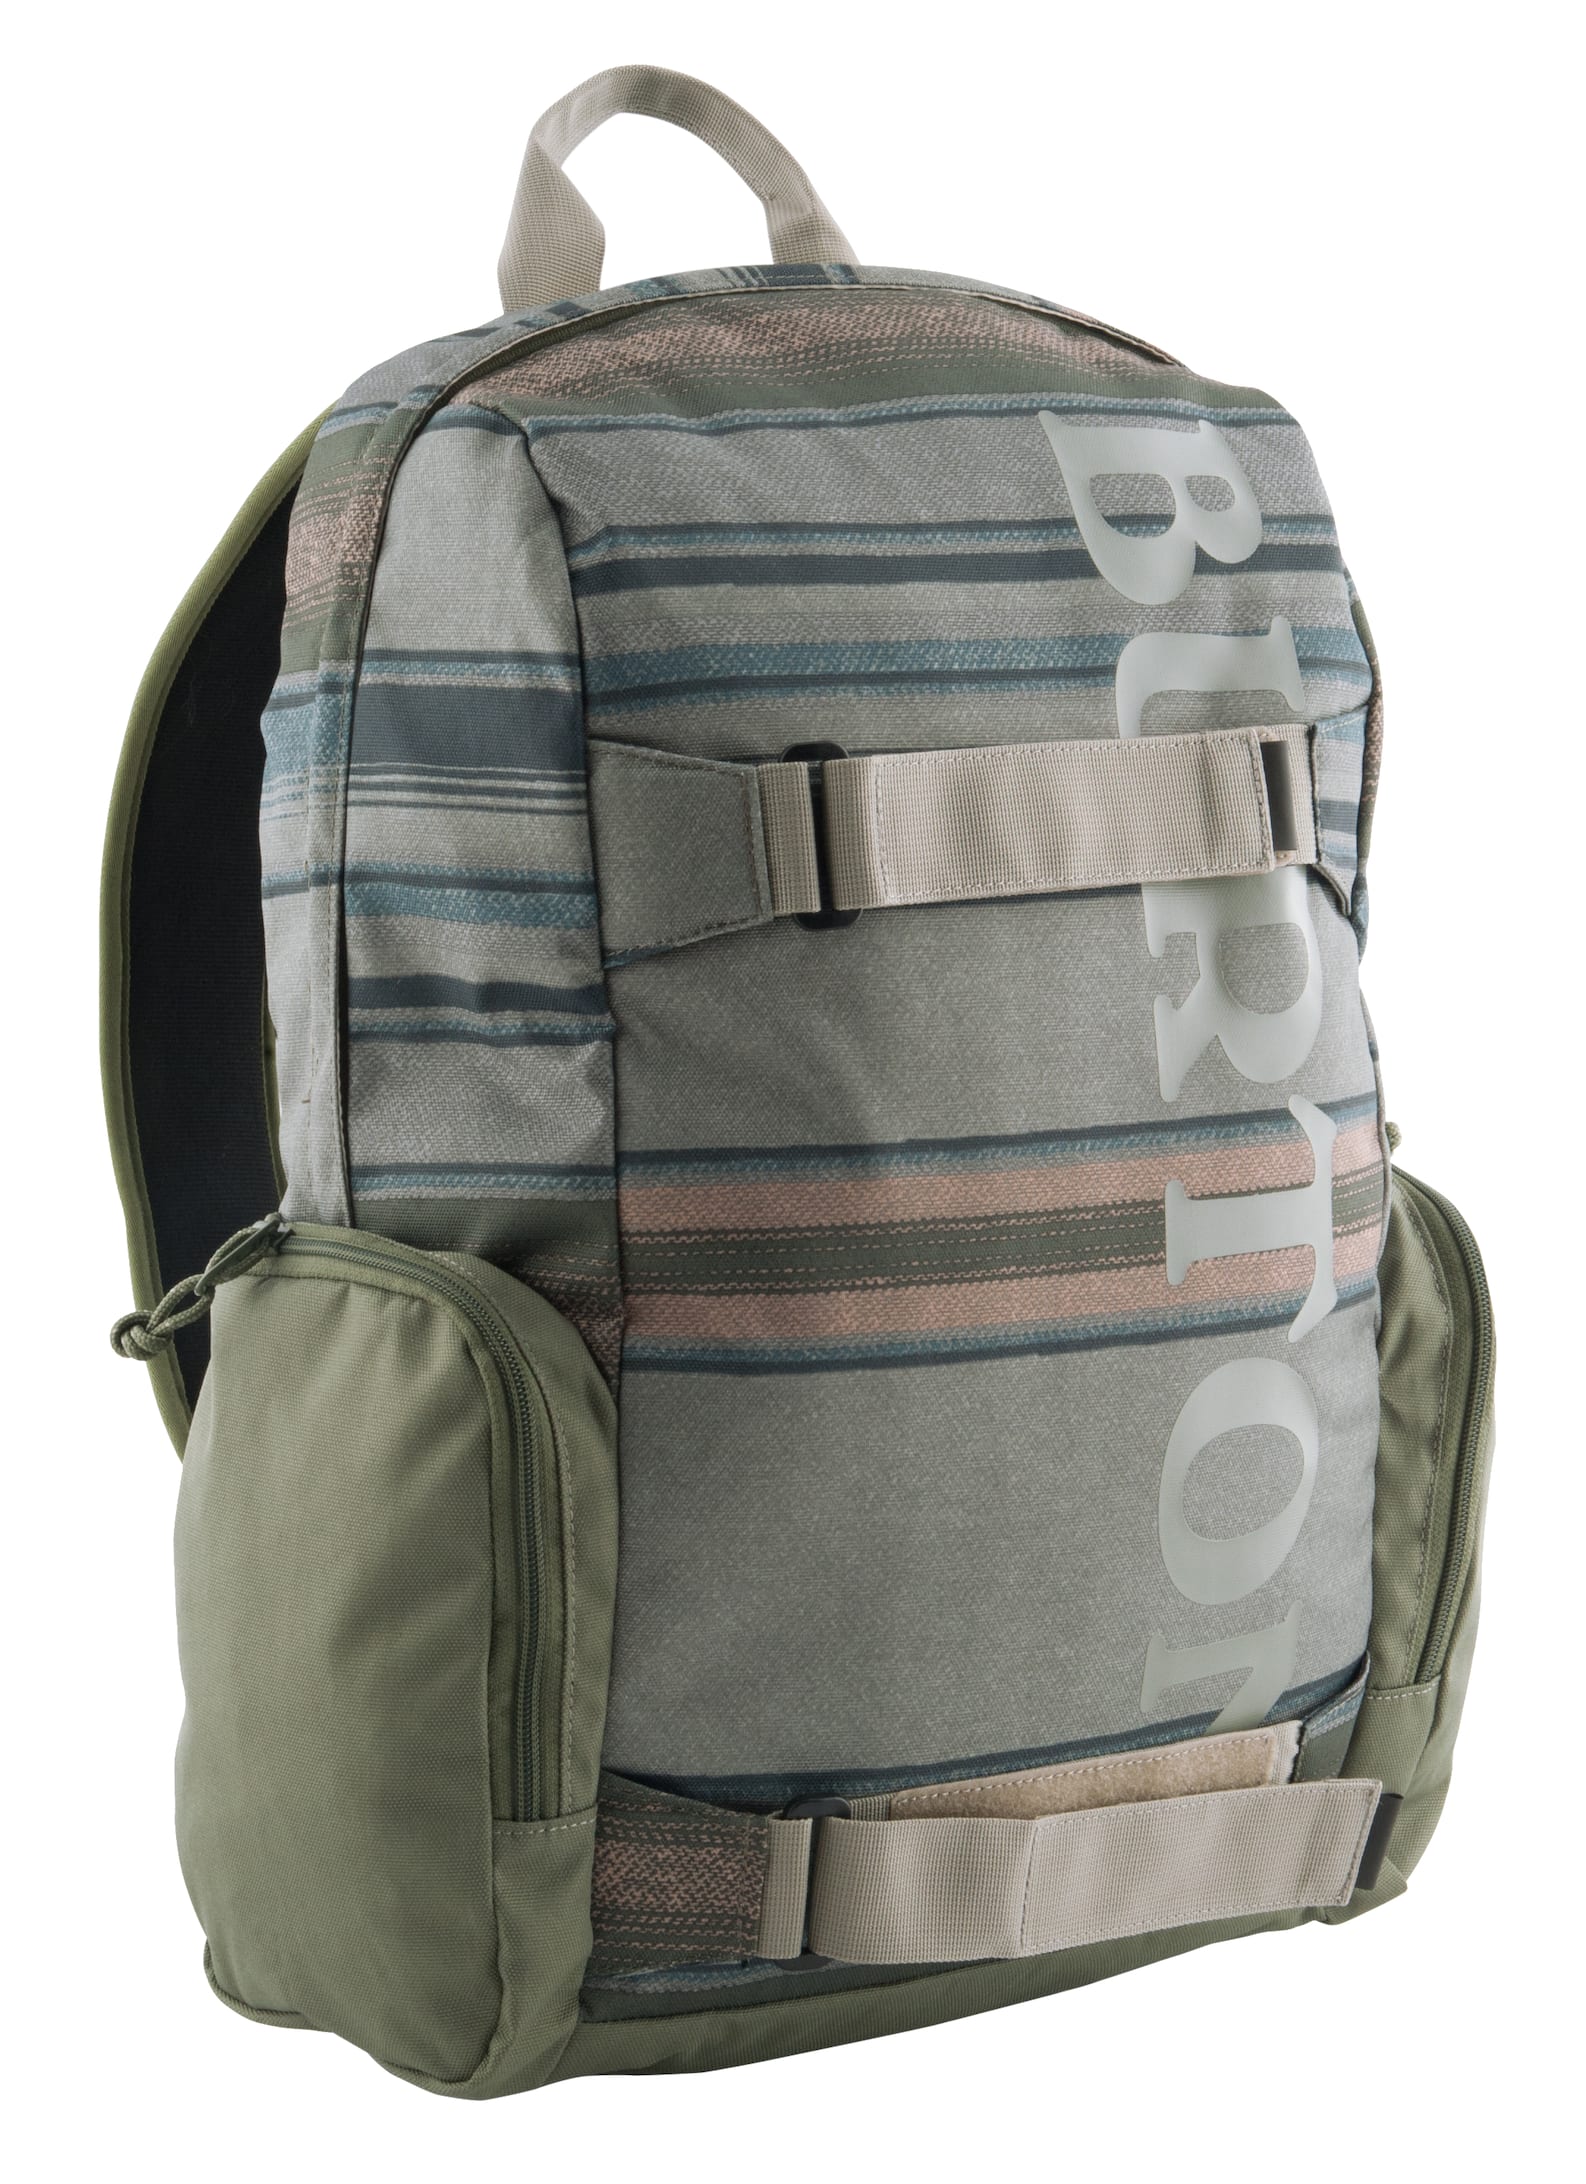 Burton Emphasis Backpack | Burton.com Fall 2019 US